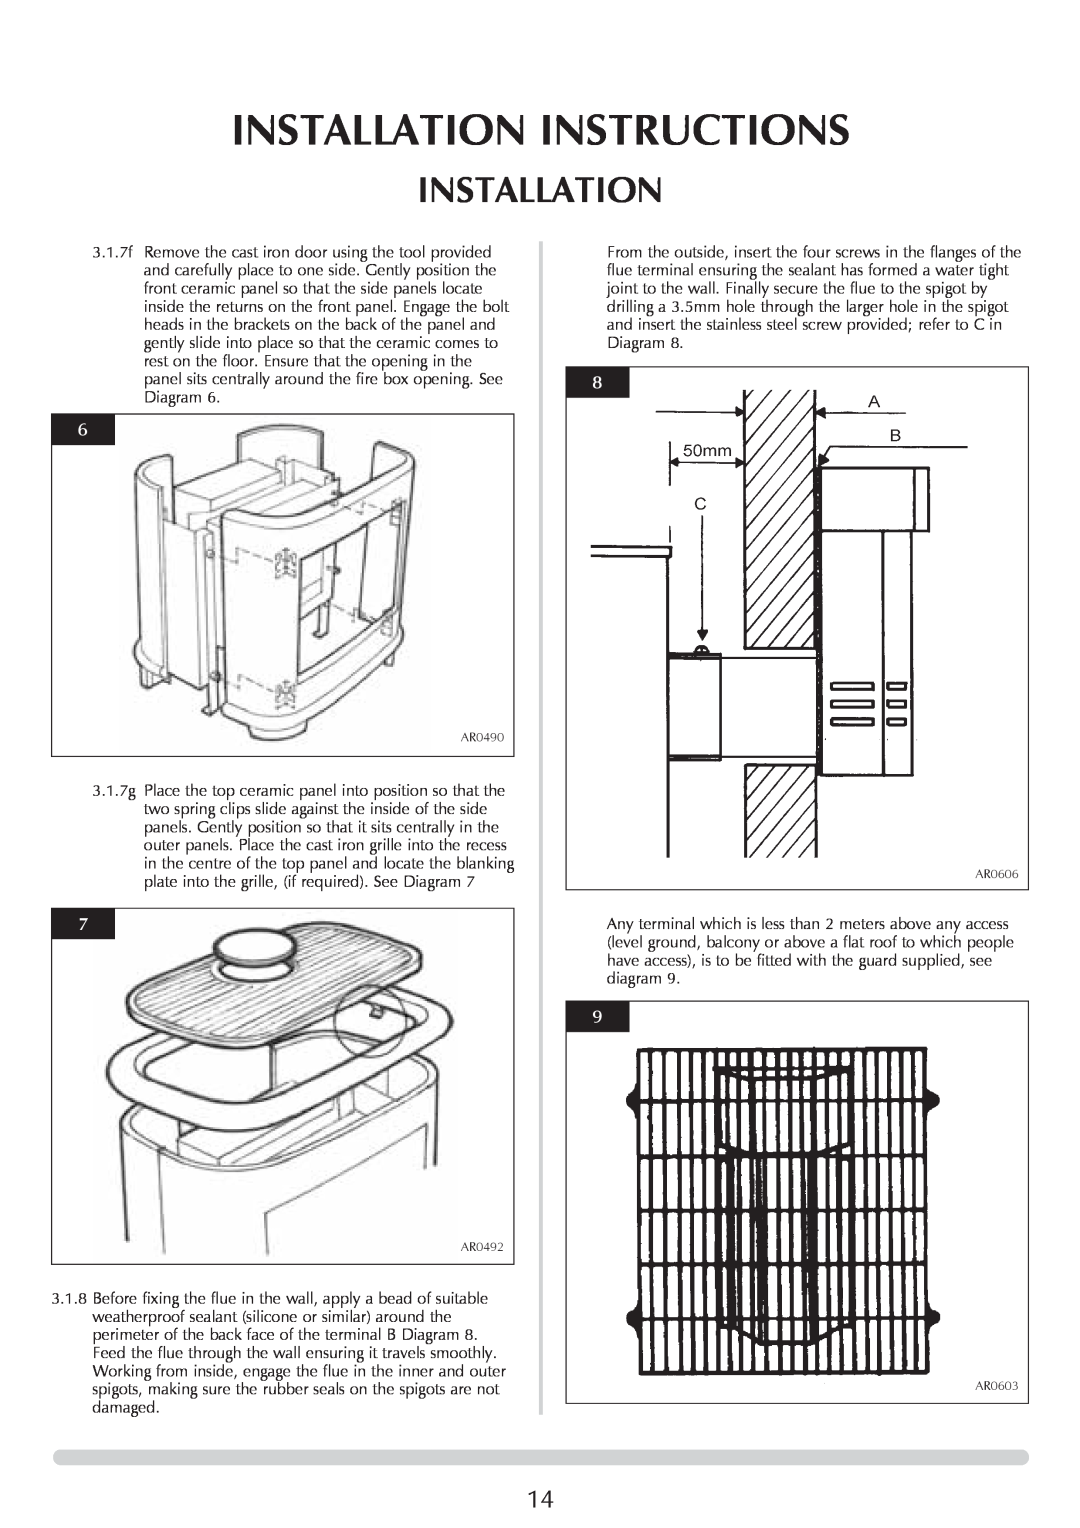 Stovax Ceramica Manhattan Wood Stove manual Installation Instructions, AR0490, AR0492, AR0606, AR0603 